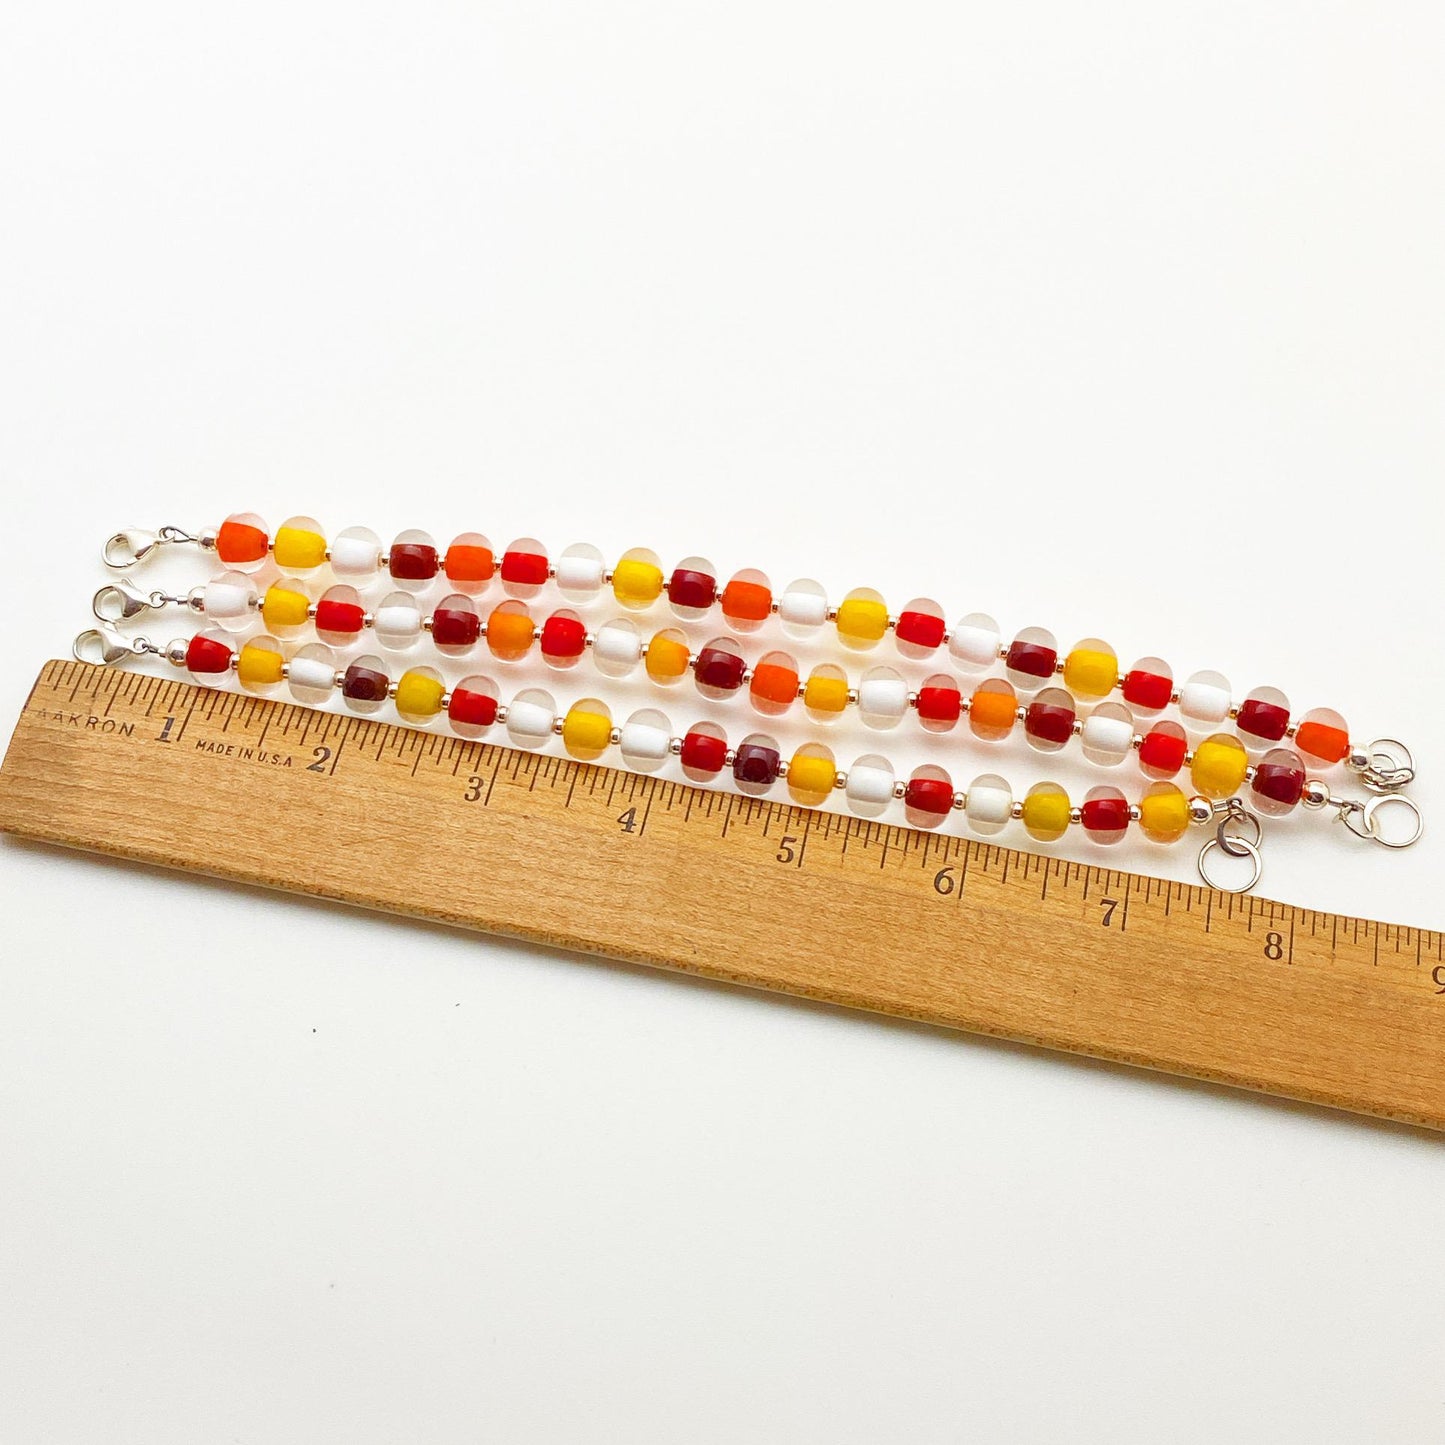 Bracelet - Glass Pearl - Red/Yellow/Orange/White